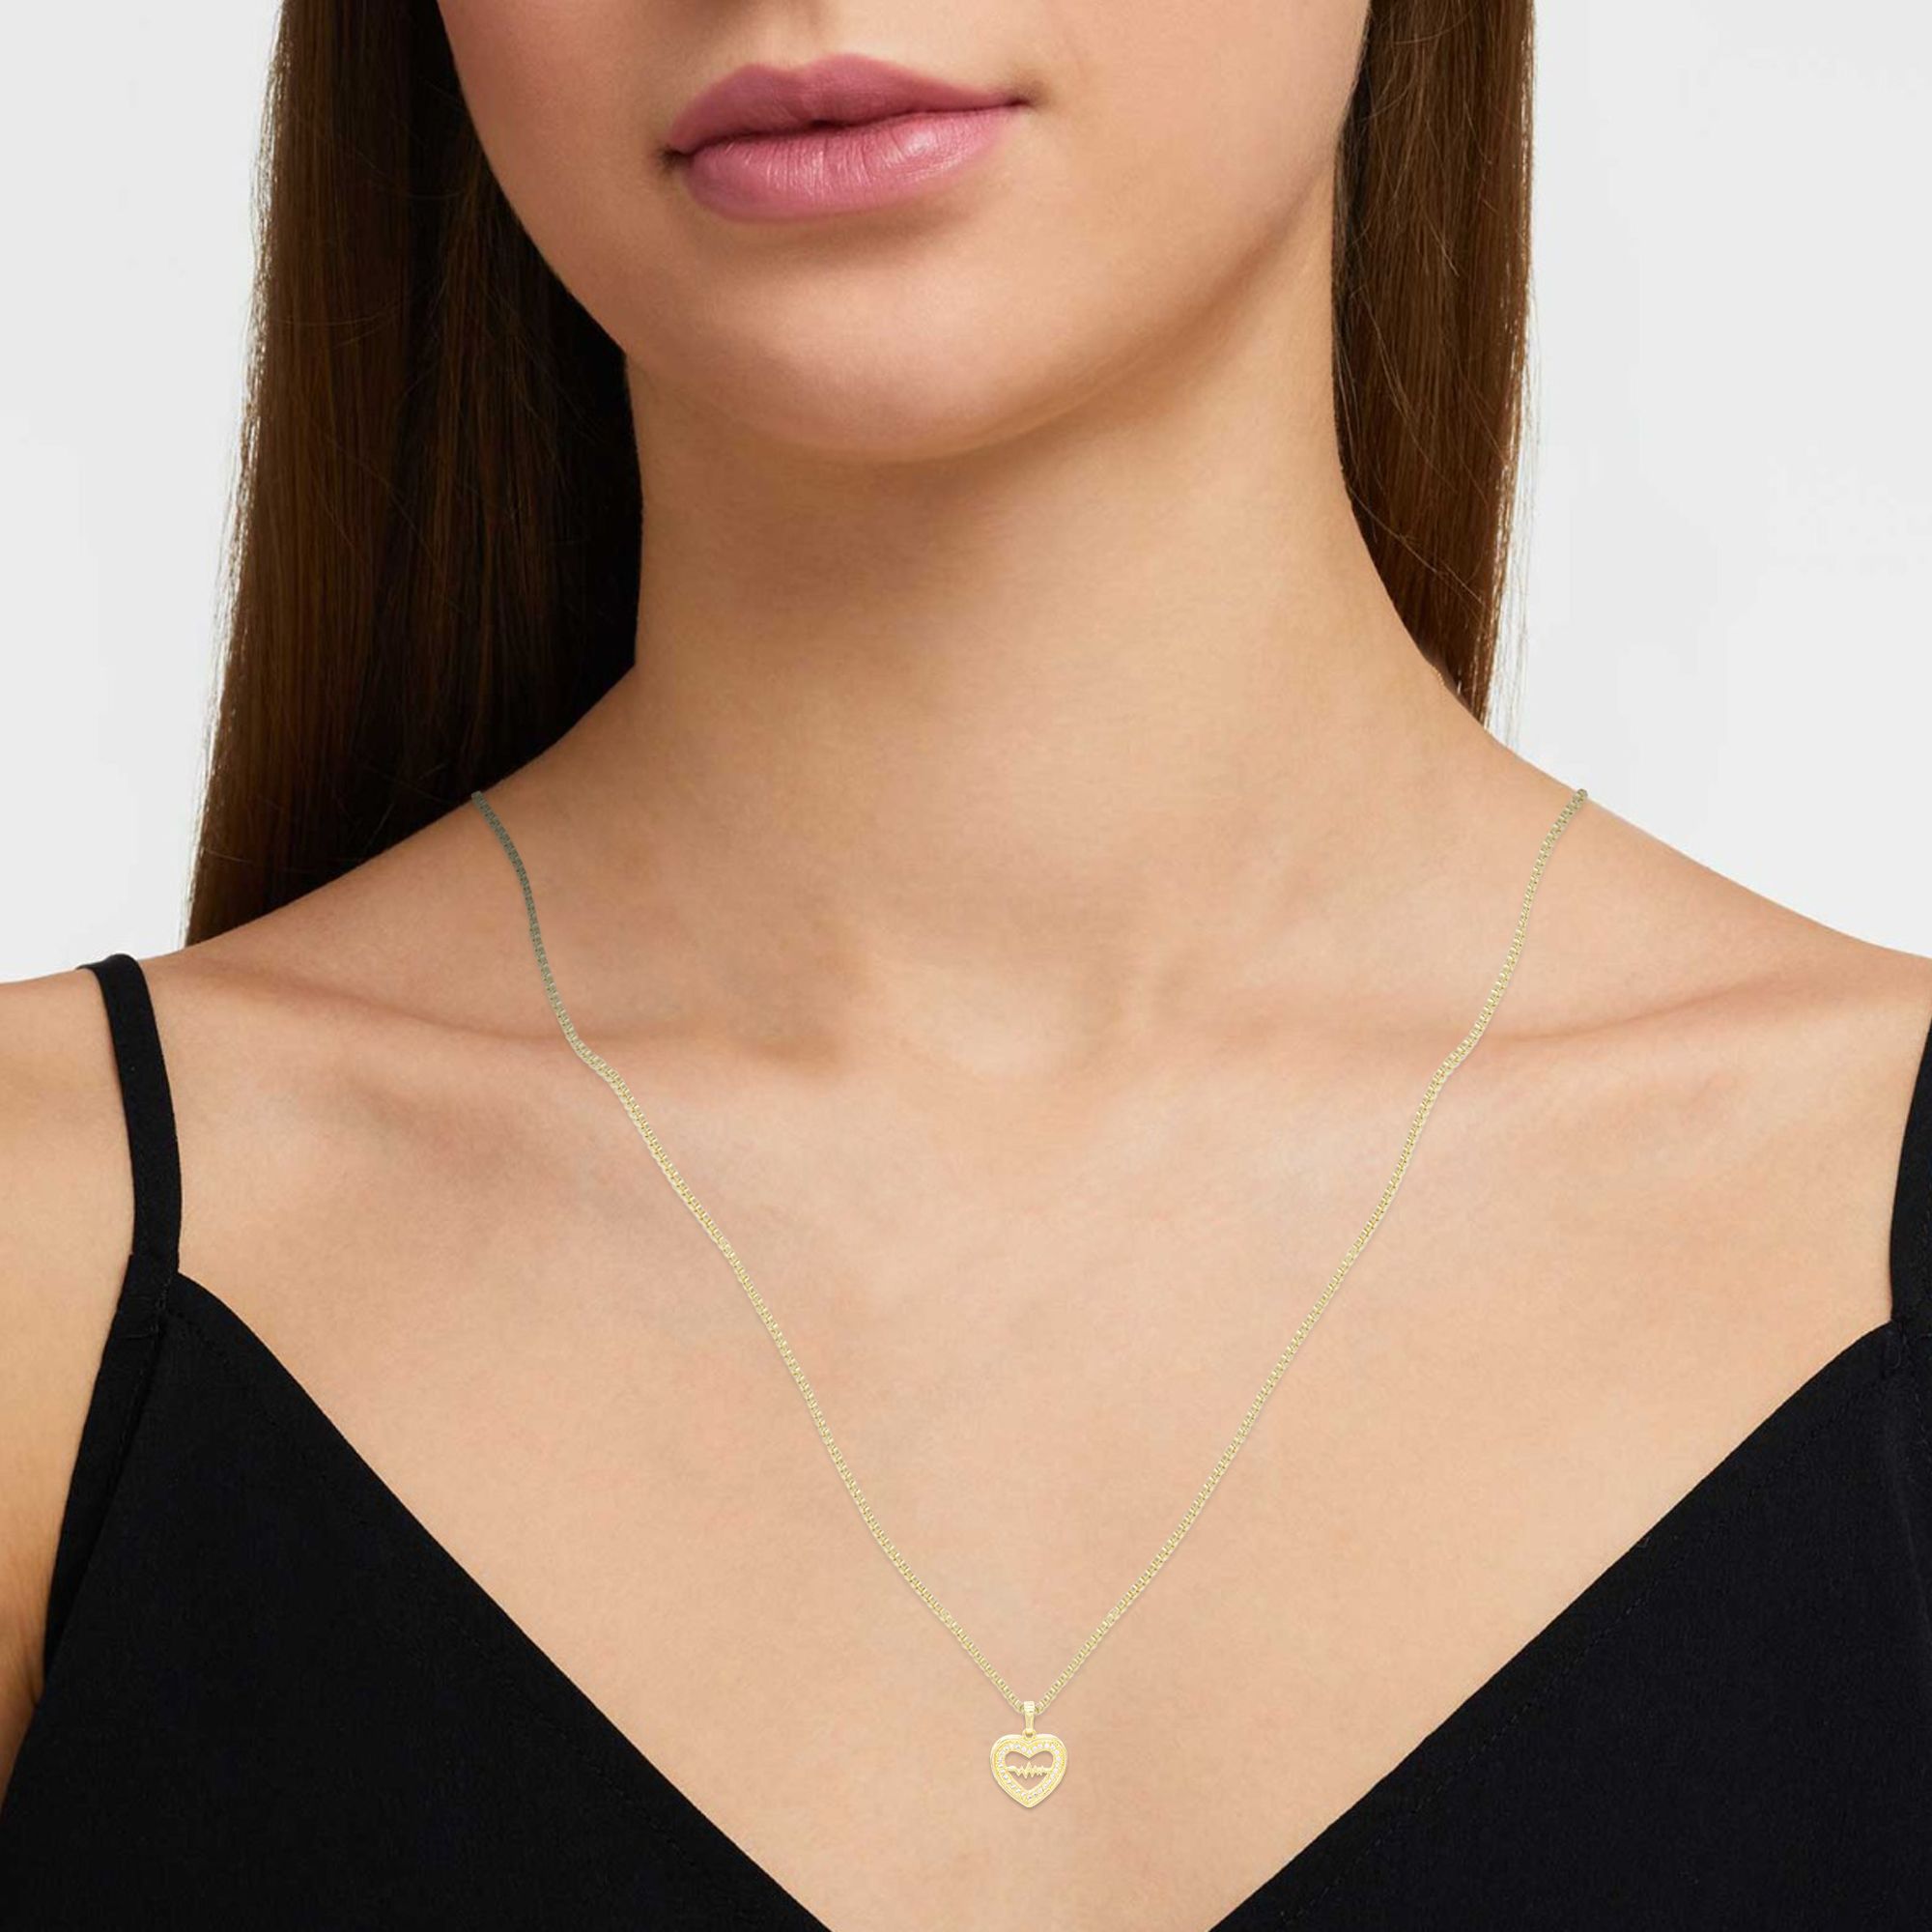 Beberlini Women's Heart Pendant Charm Necklace Set